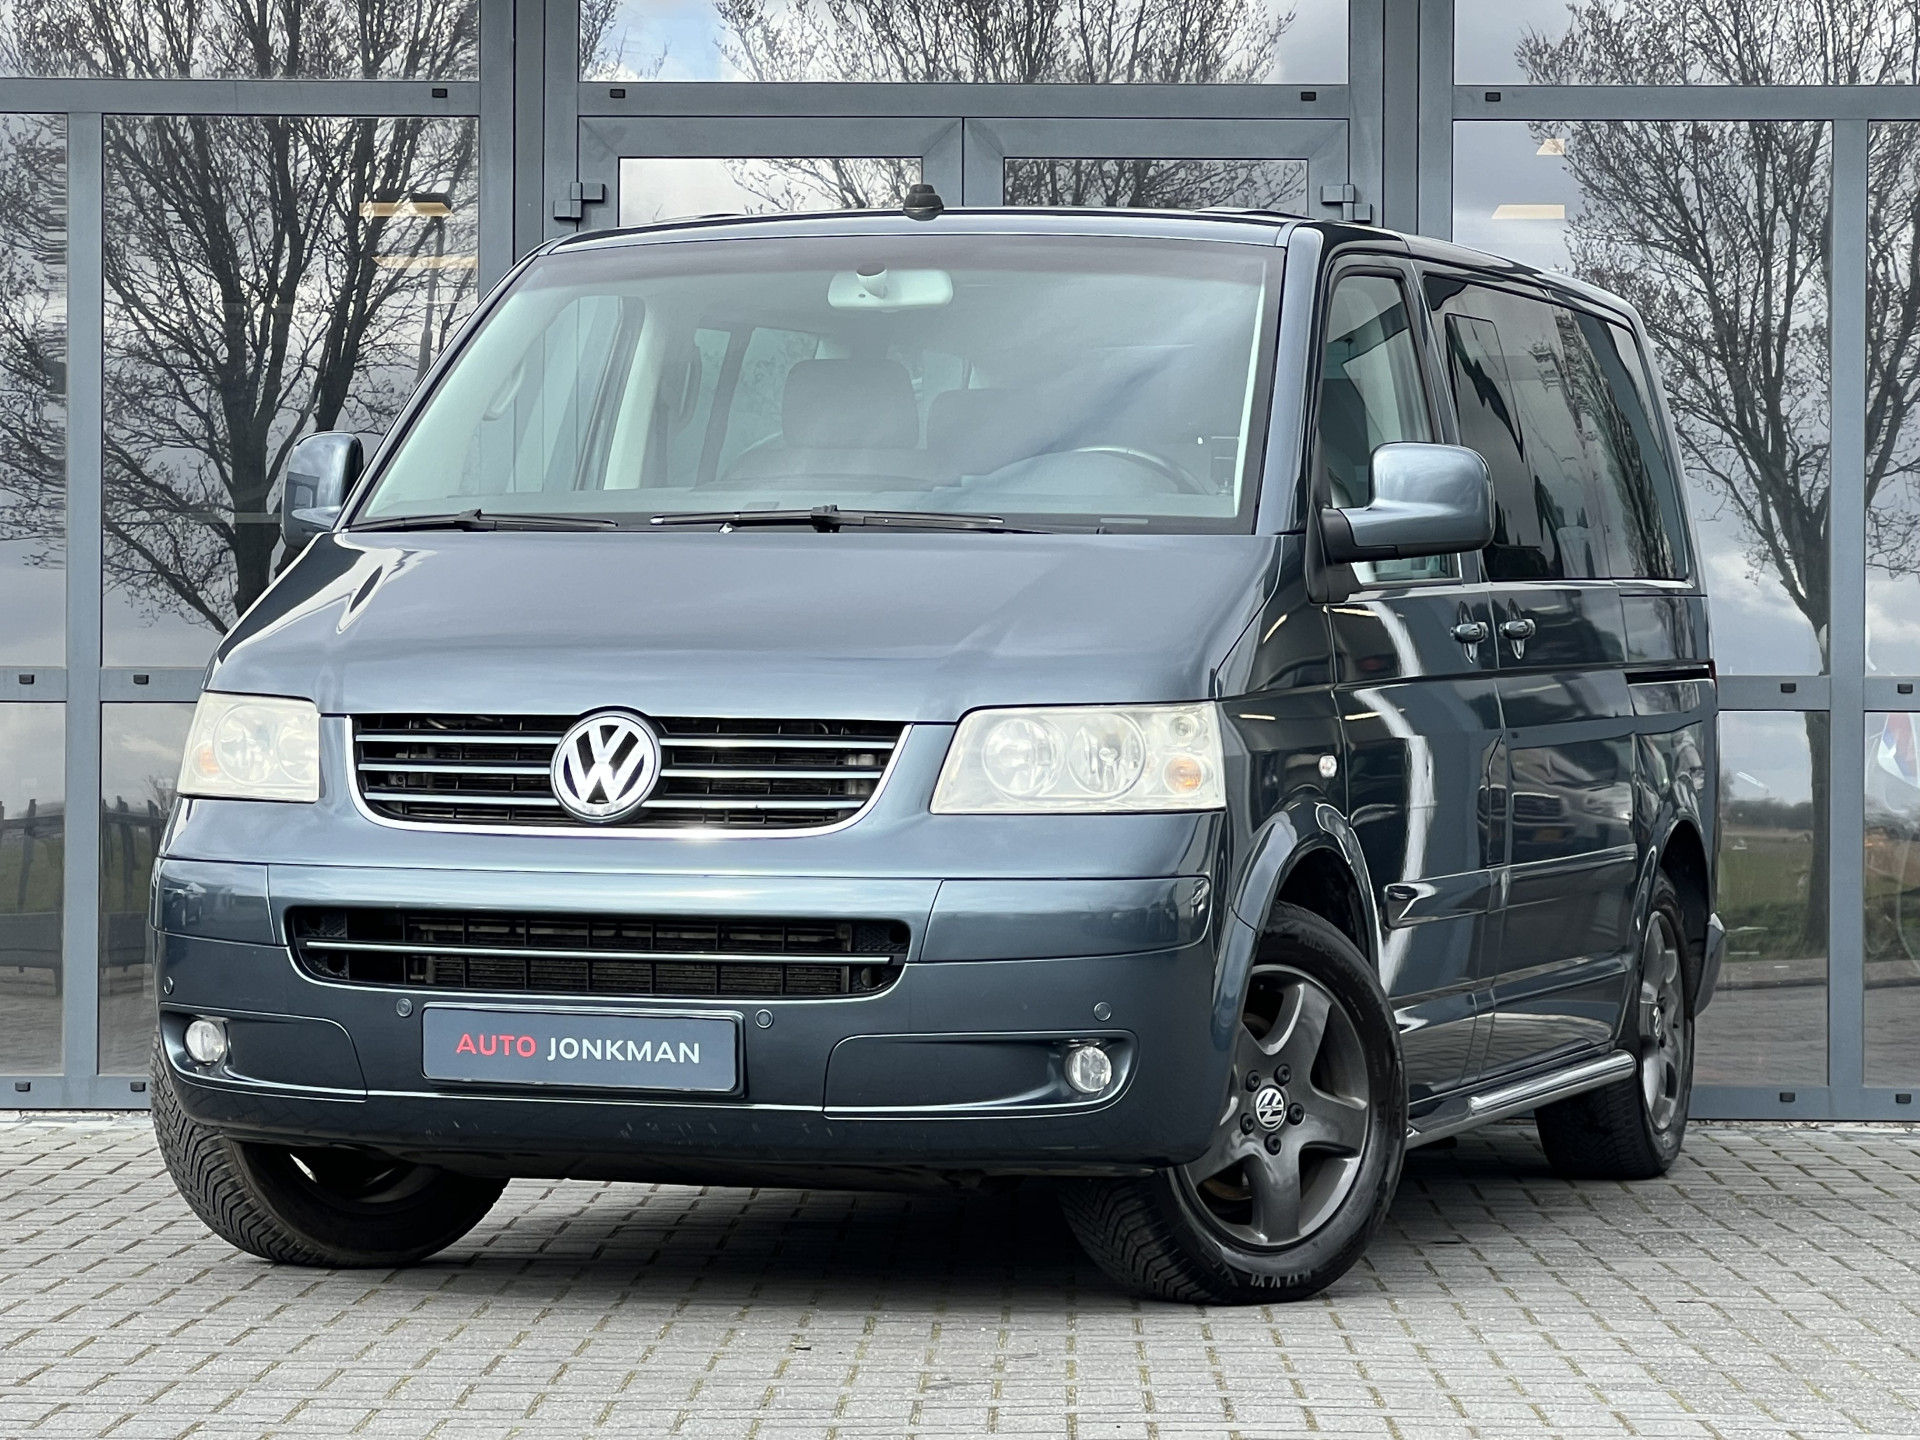 Volkswagen-Transporter Multivan-2.5 TDI Highline-Auto Jonkman